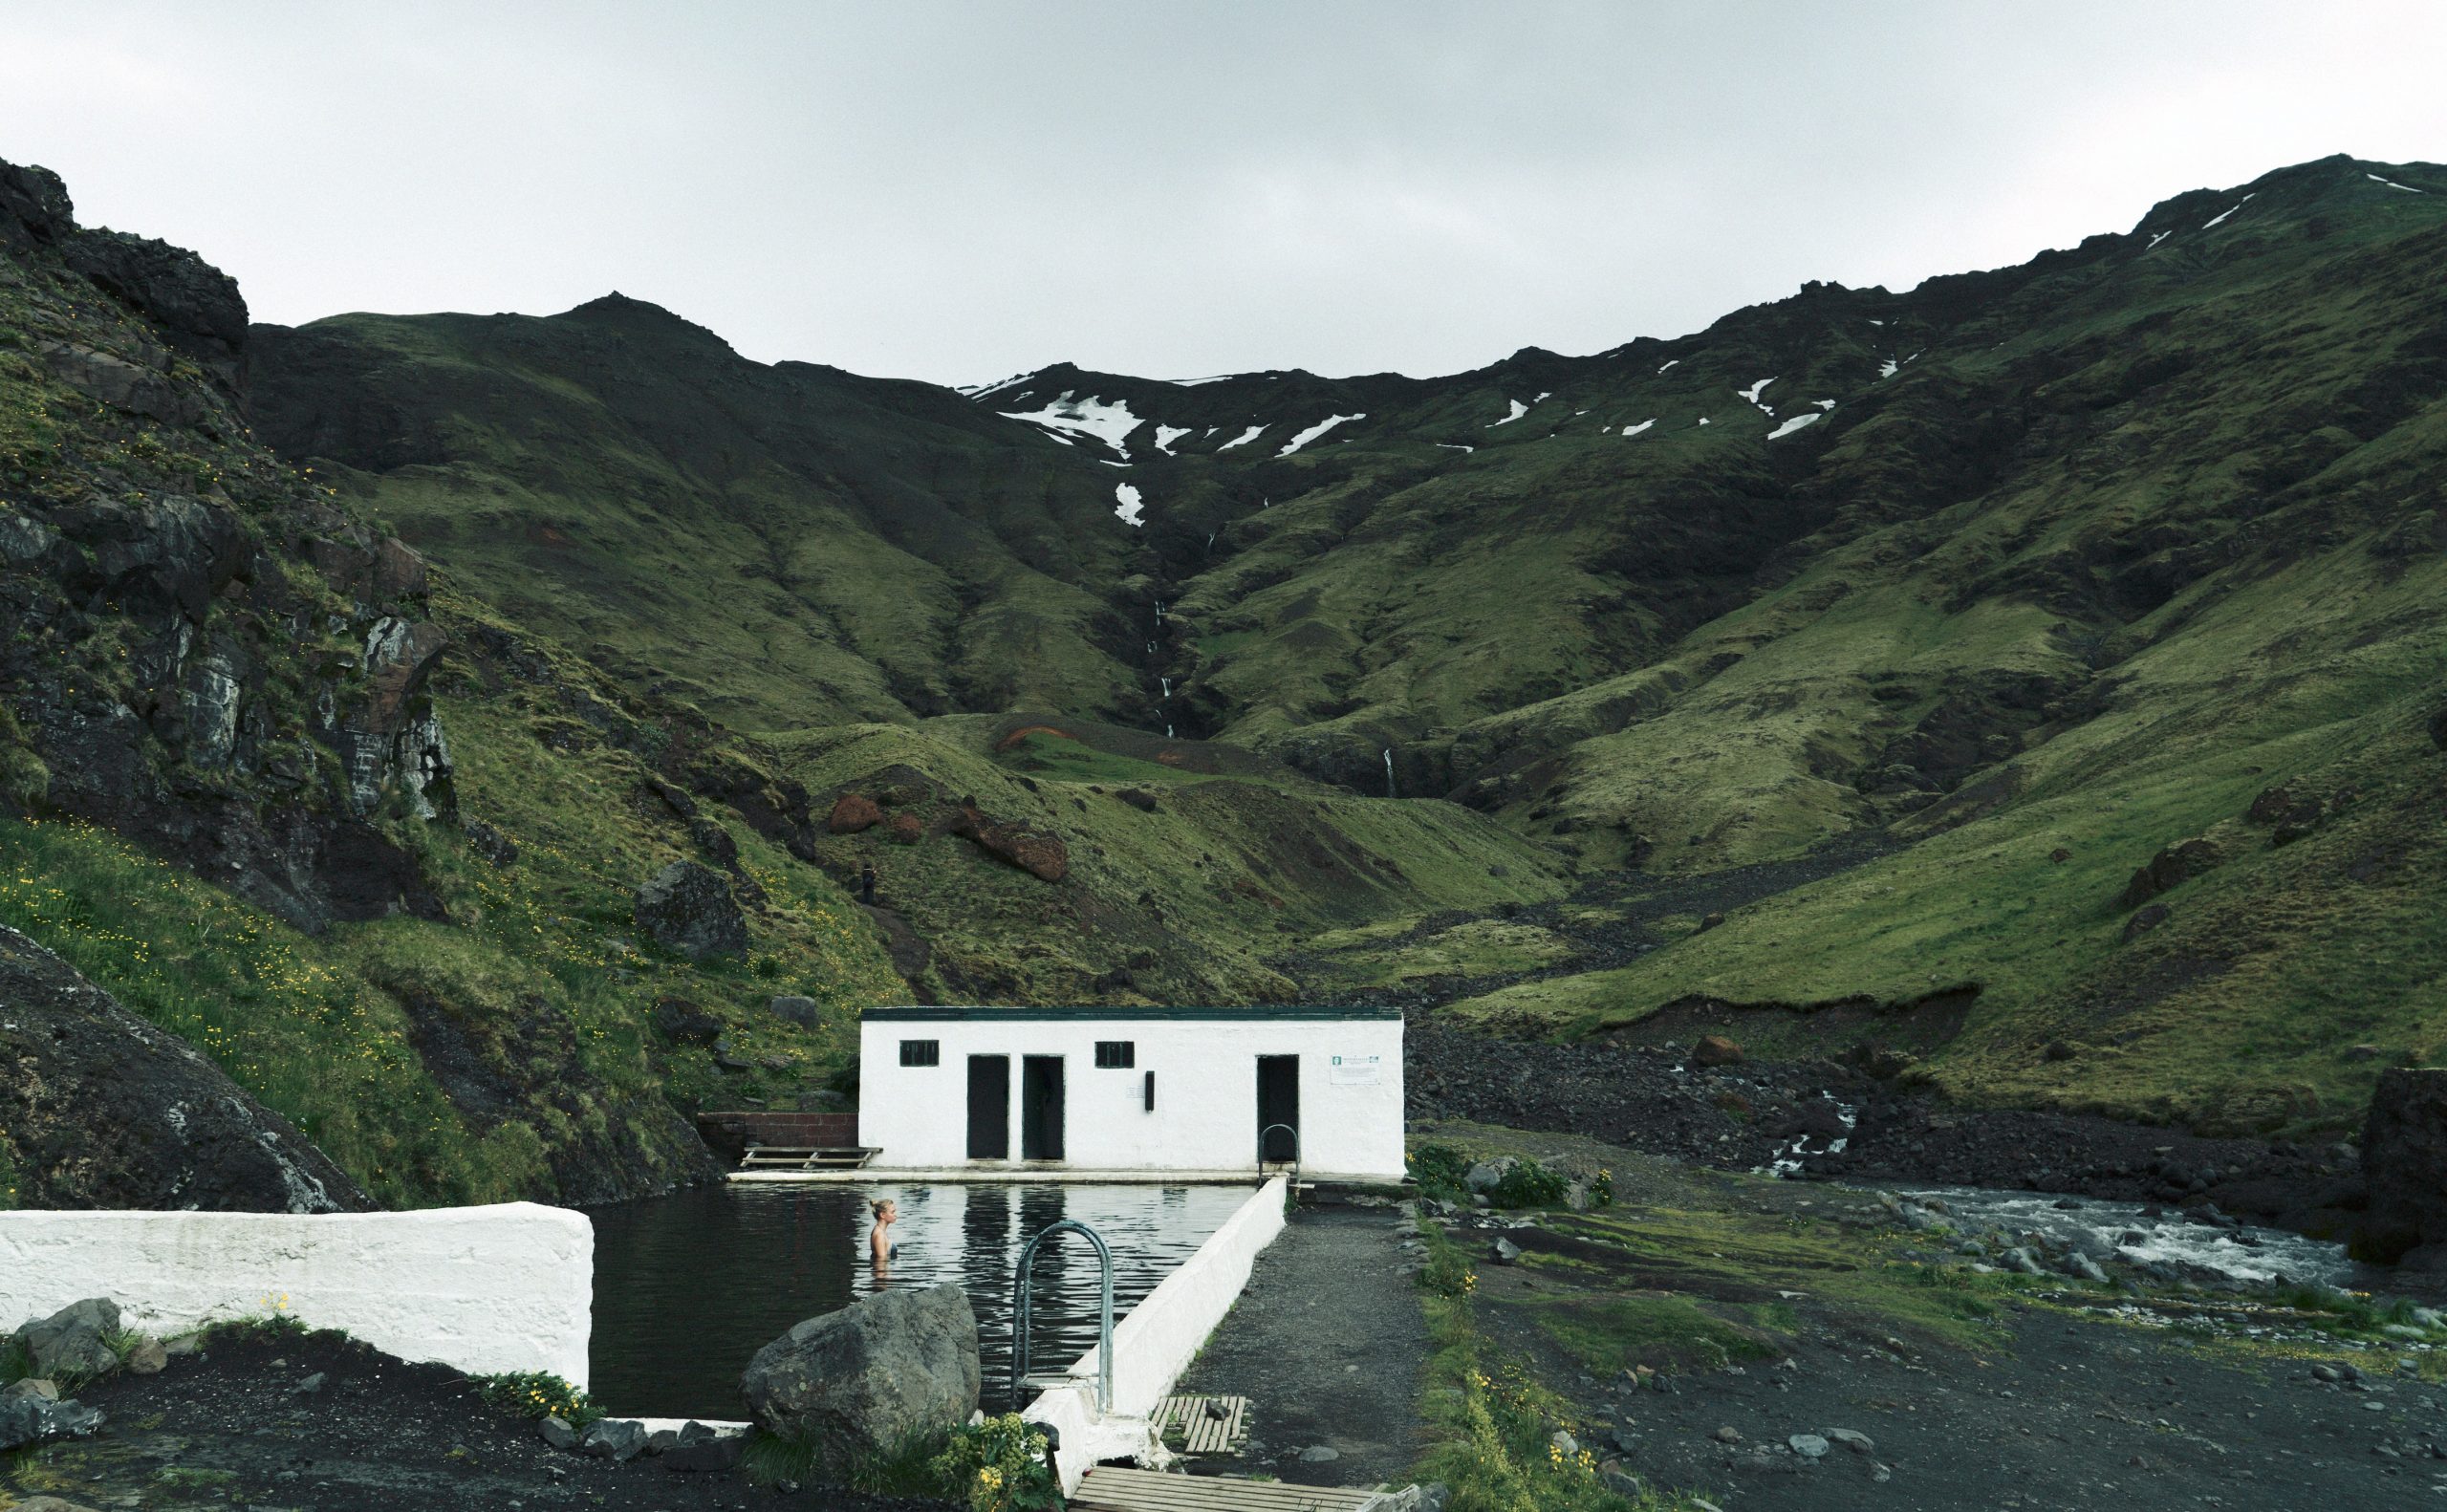 Seljavallalaug, piscina oculta en el sur de Islandia